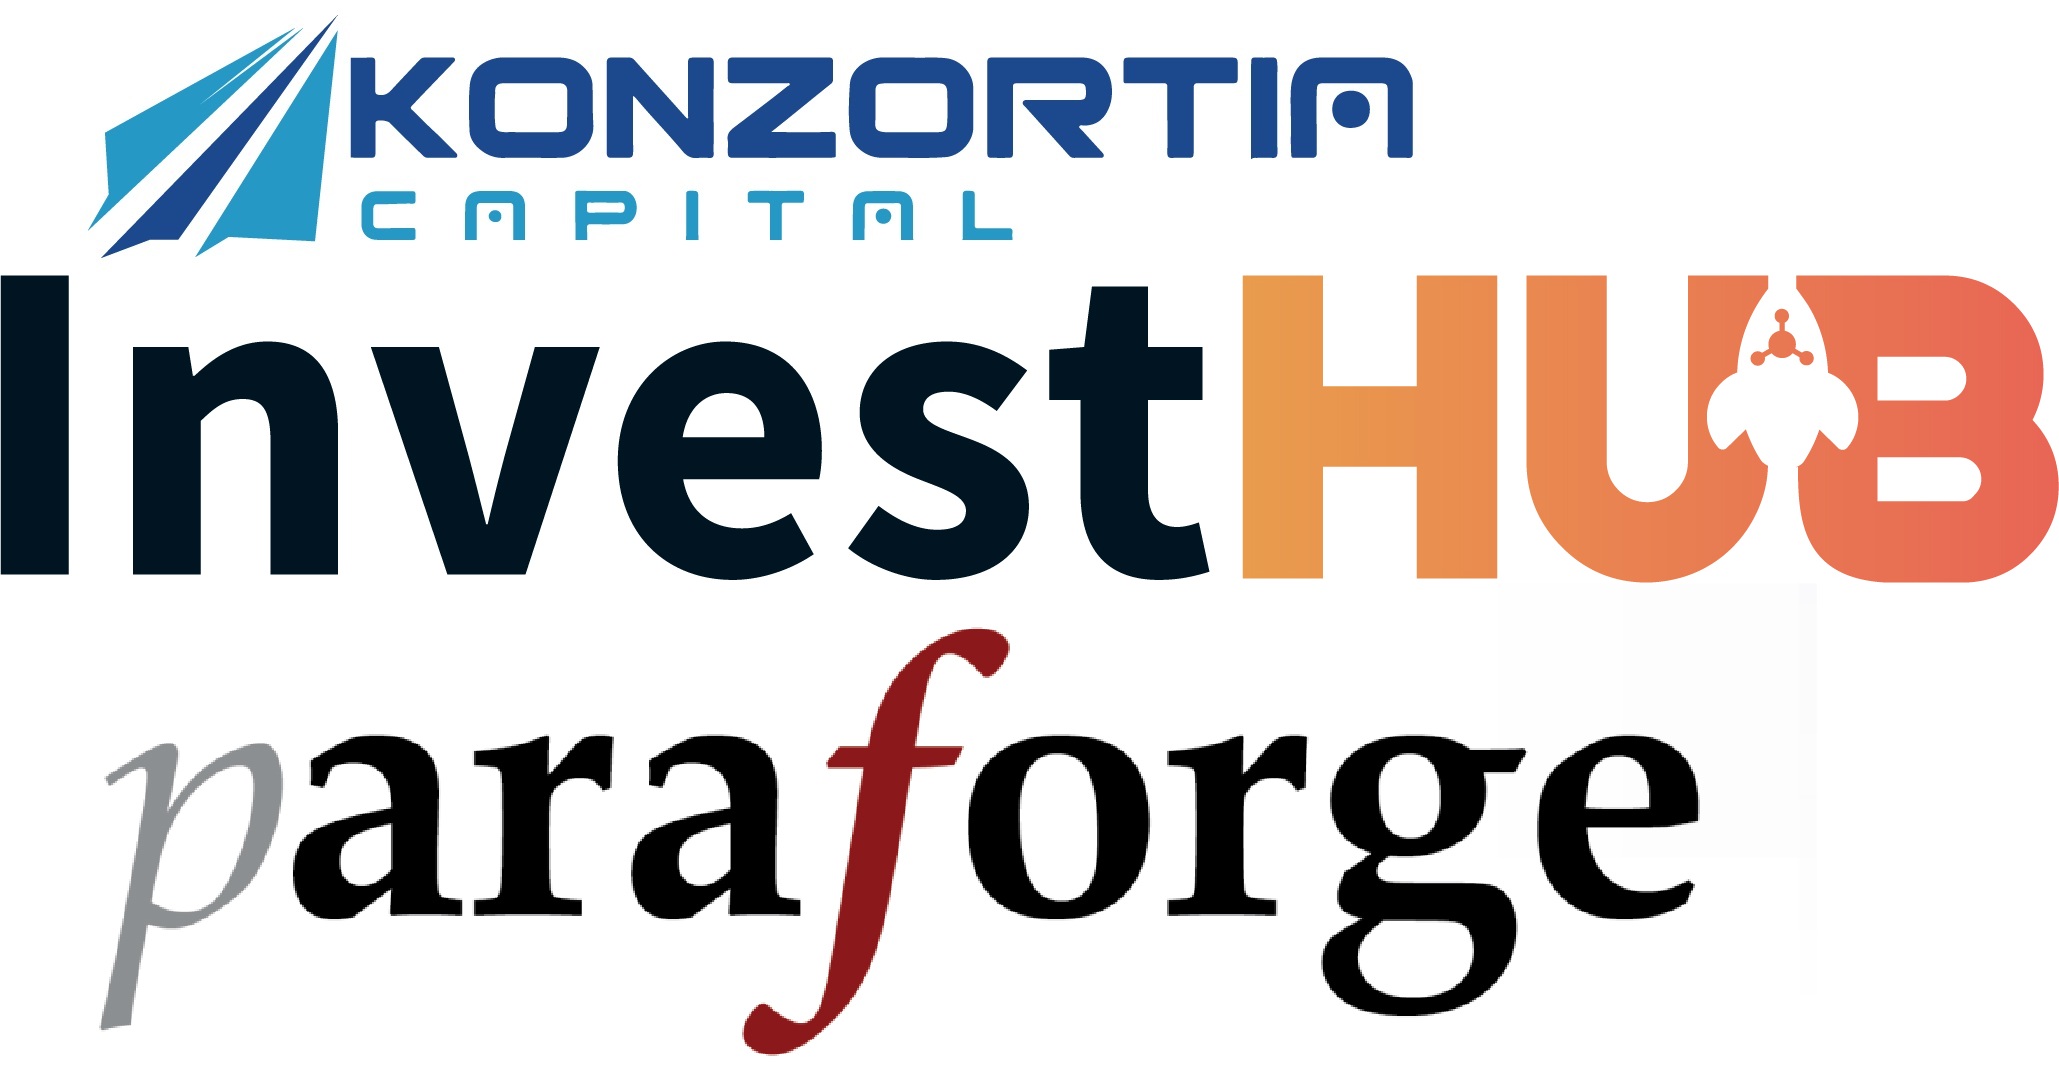 Konzortia Capital Announces Full Acquisition of Paraforge